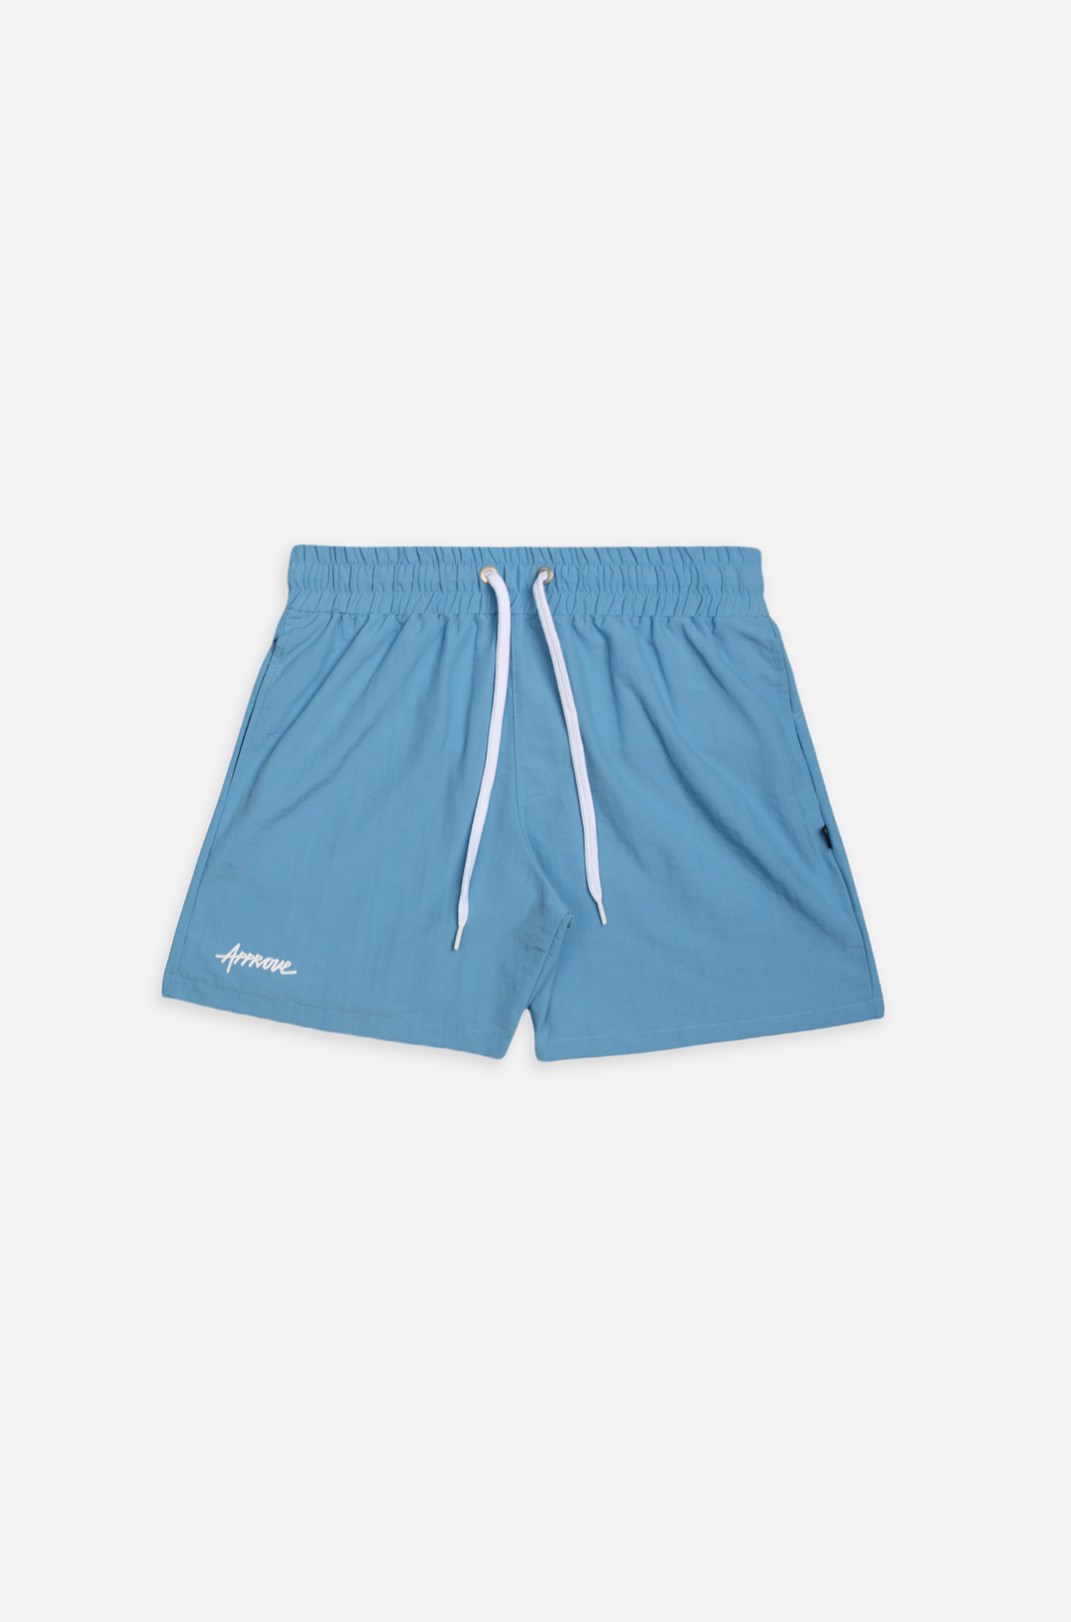 Shorts Approve Azul